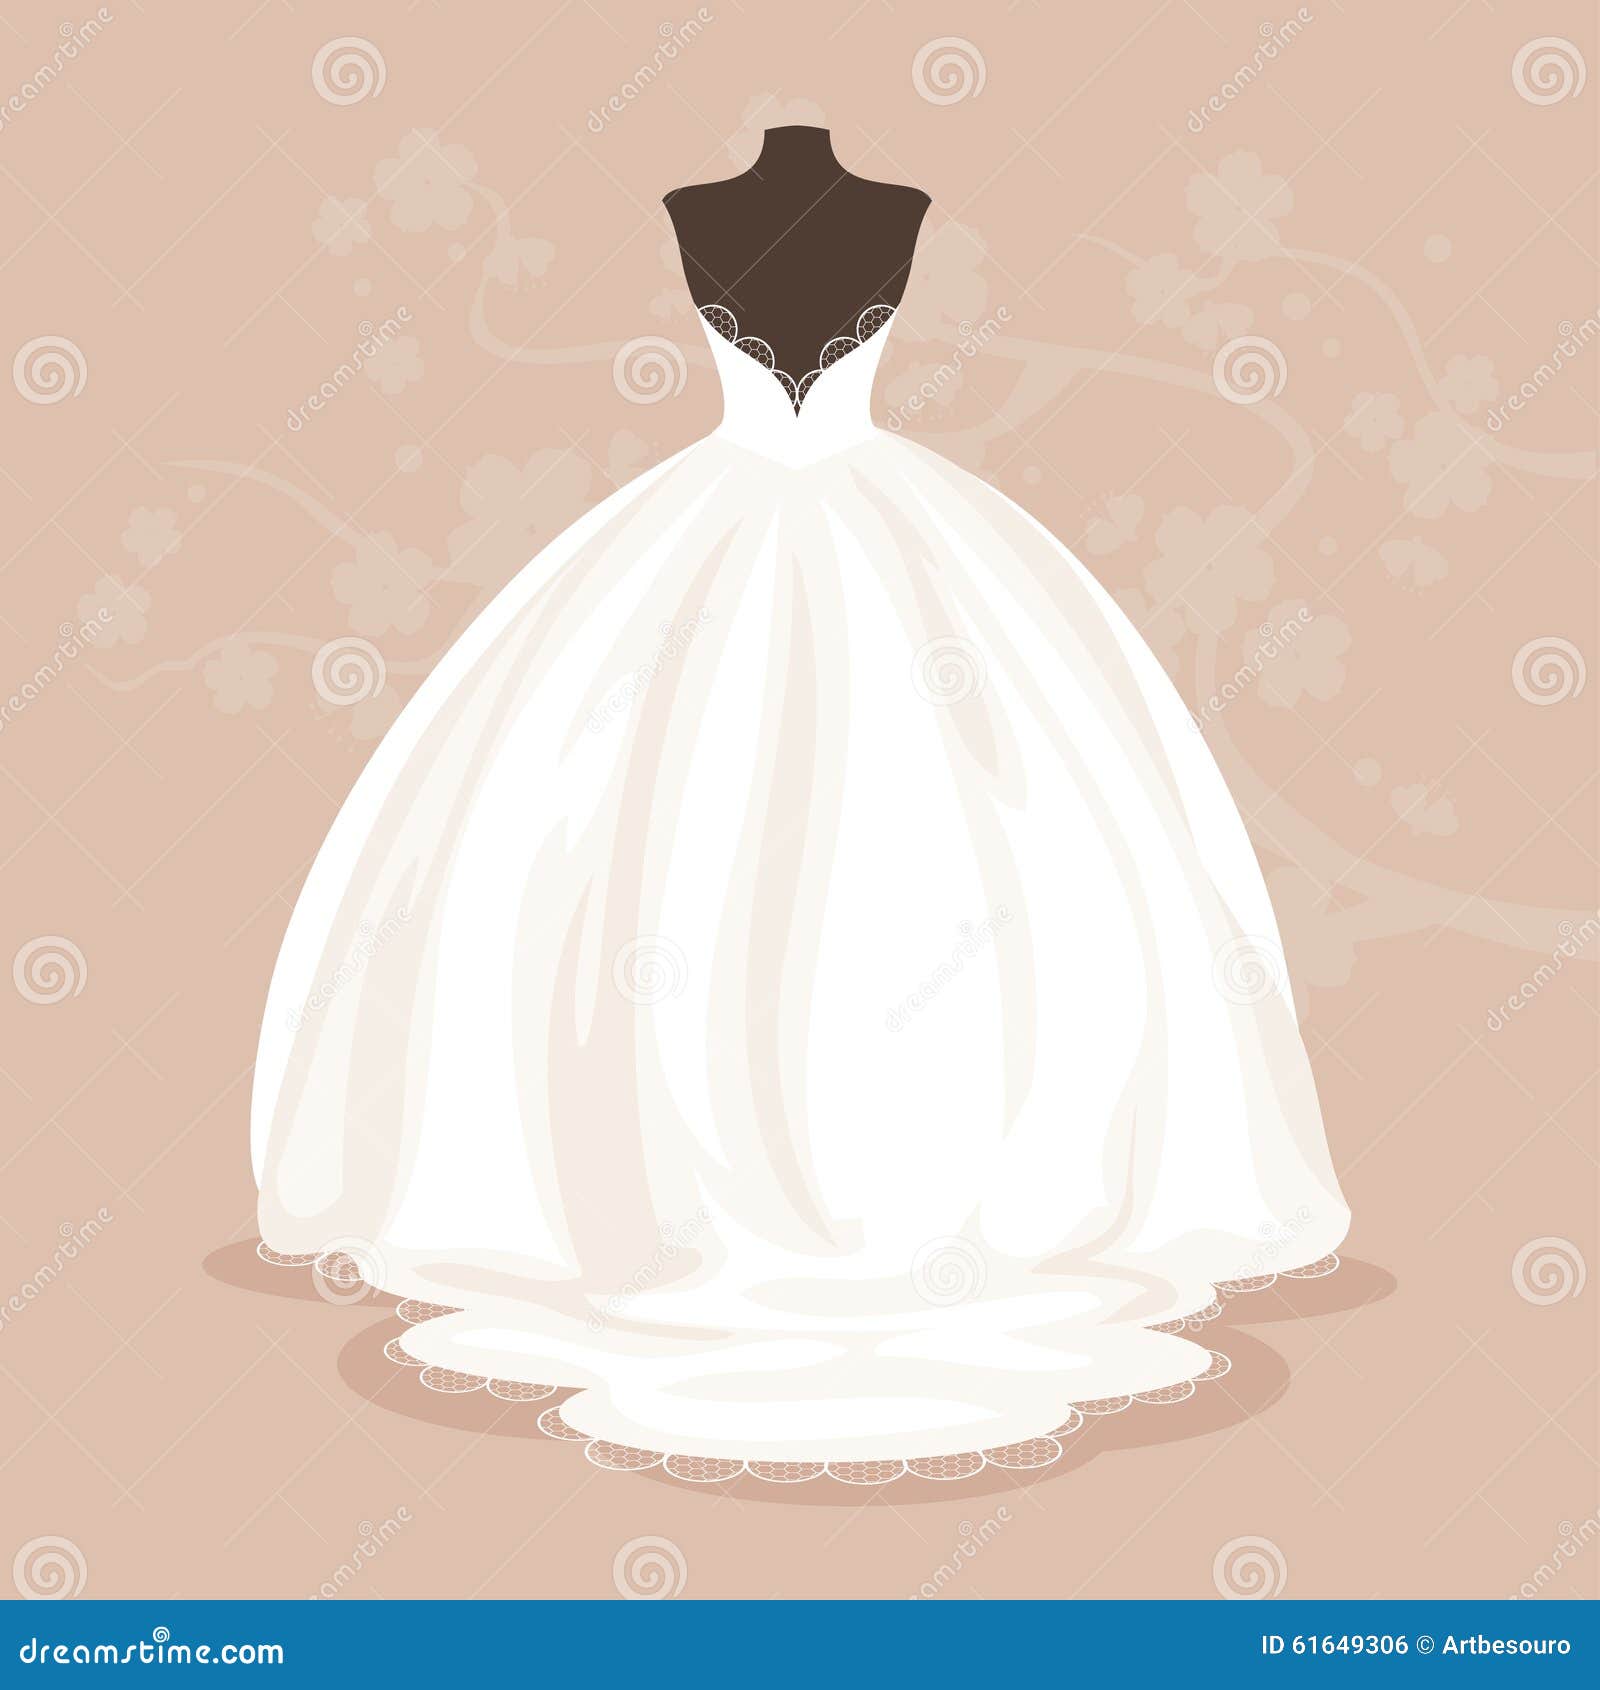 wedding dress clipart vector - photo #25